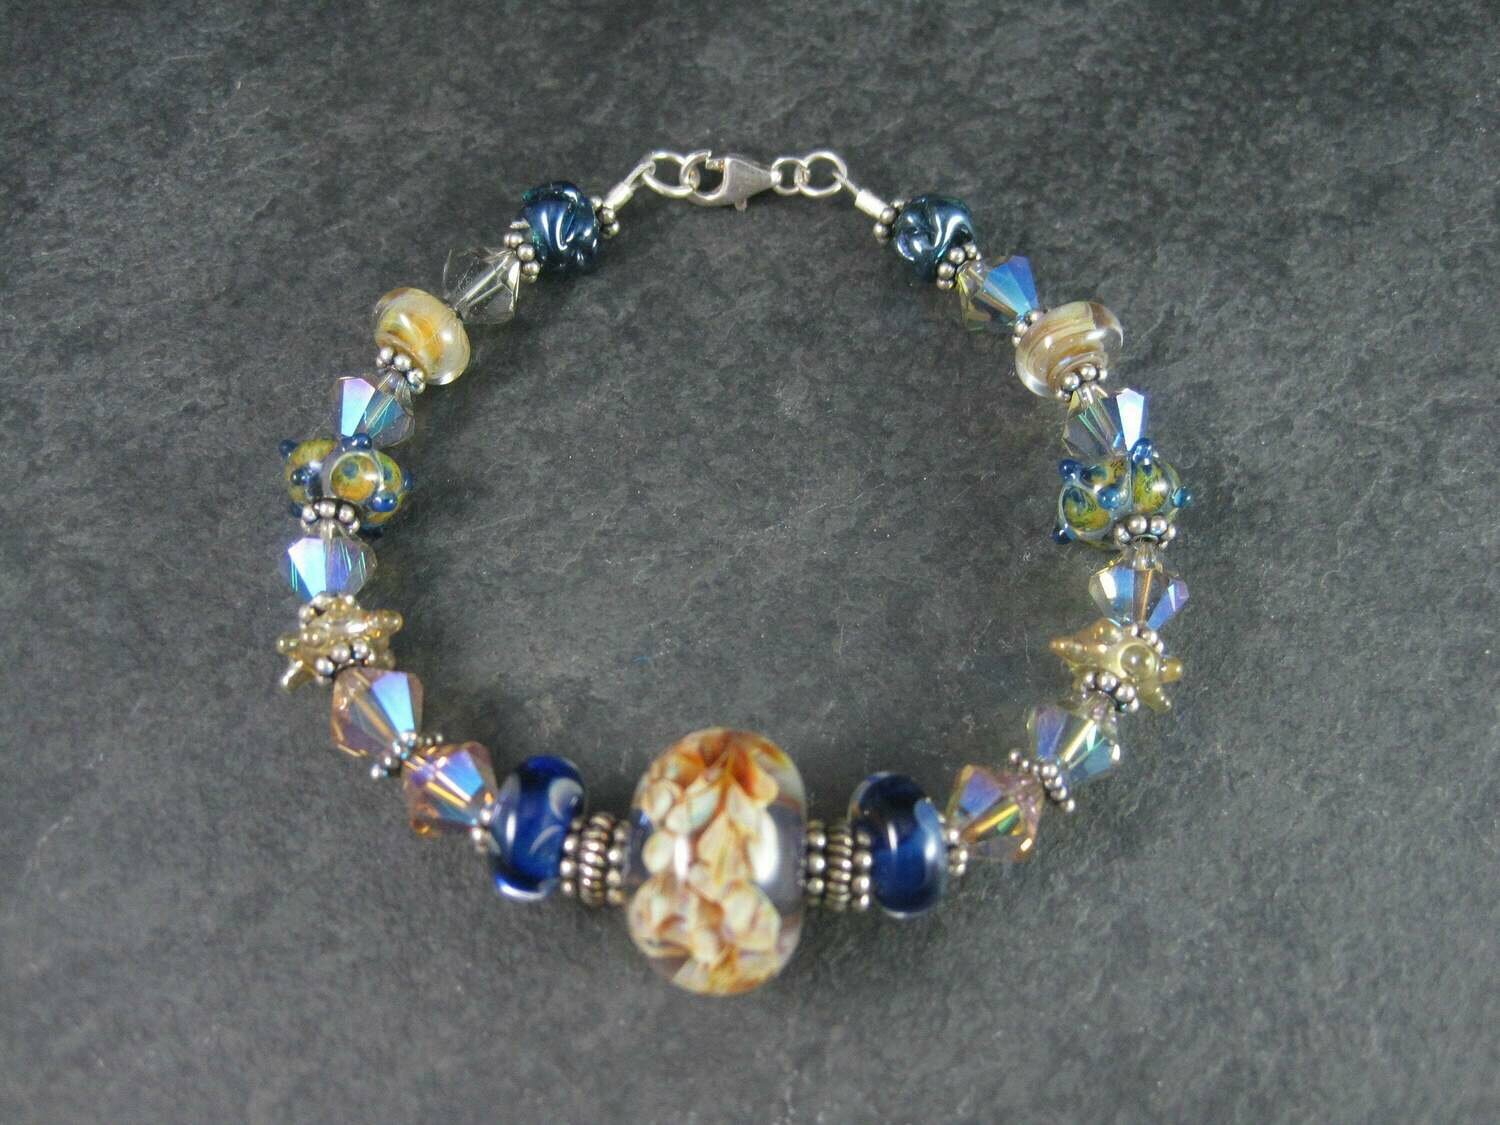 Handmade Blue Amber Lampwork Art Glass Bead Bracelet 8 Inches